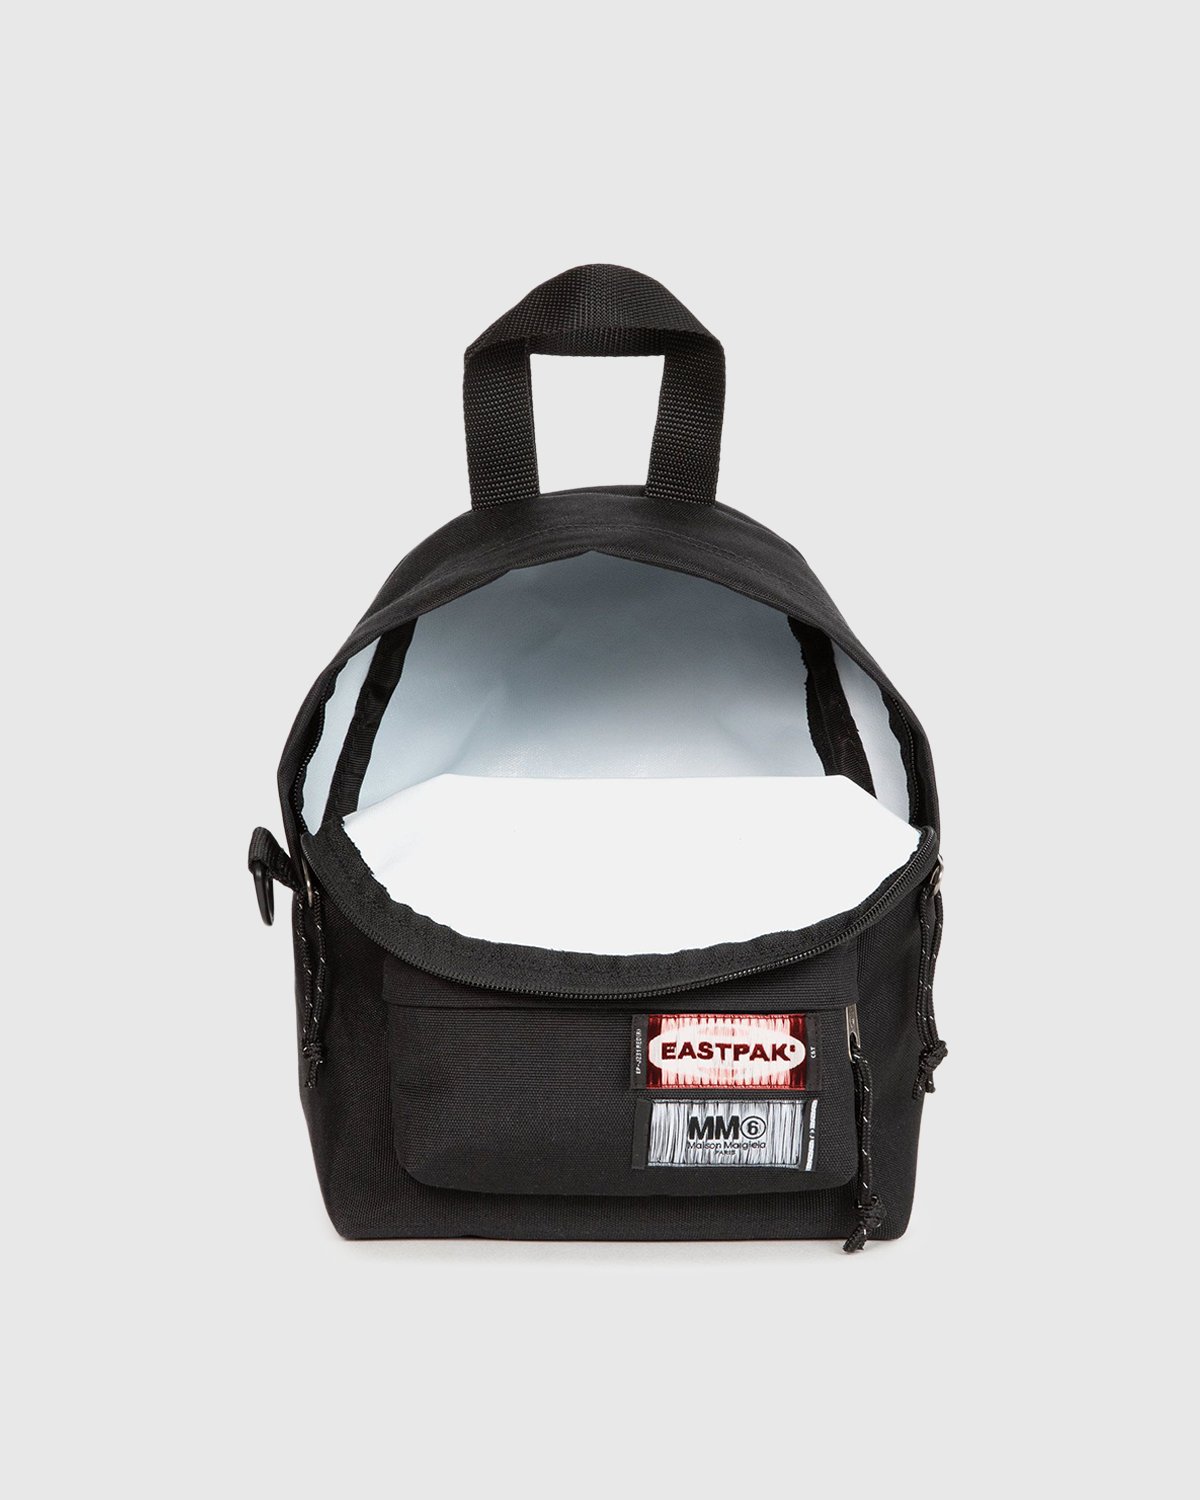 MM6 Maison Margiela x Eastpak - Shoulder Bag Black - Accessories - Black - Image 2